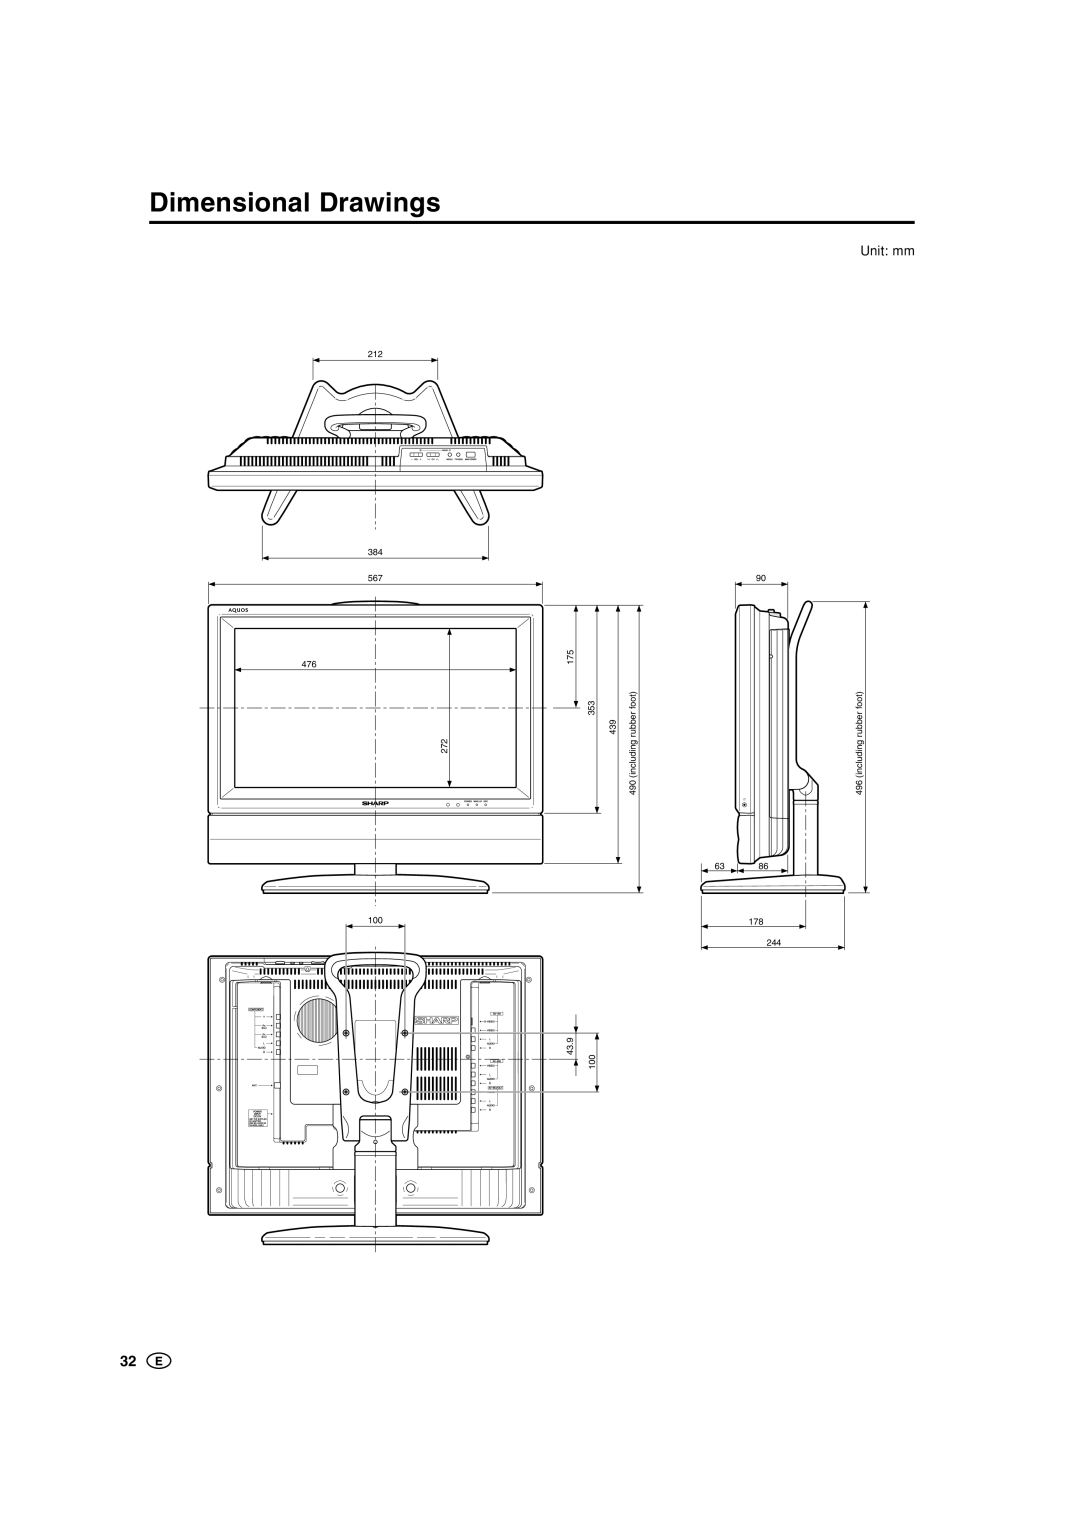 Sharp LC-22GA3M, LC-22GA3X operation manual Dimensional Drawings, Unit mm 